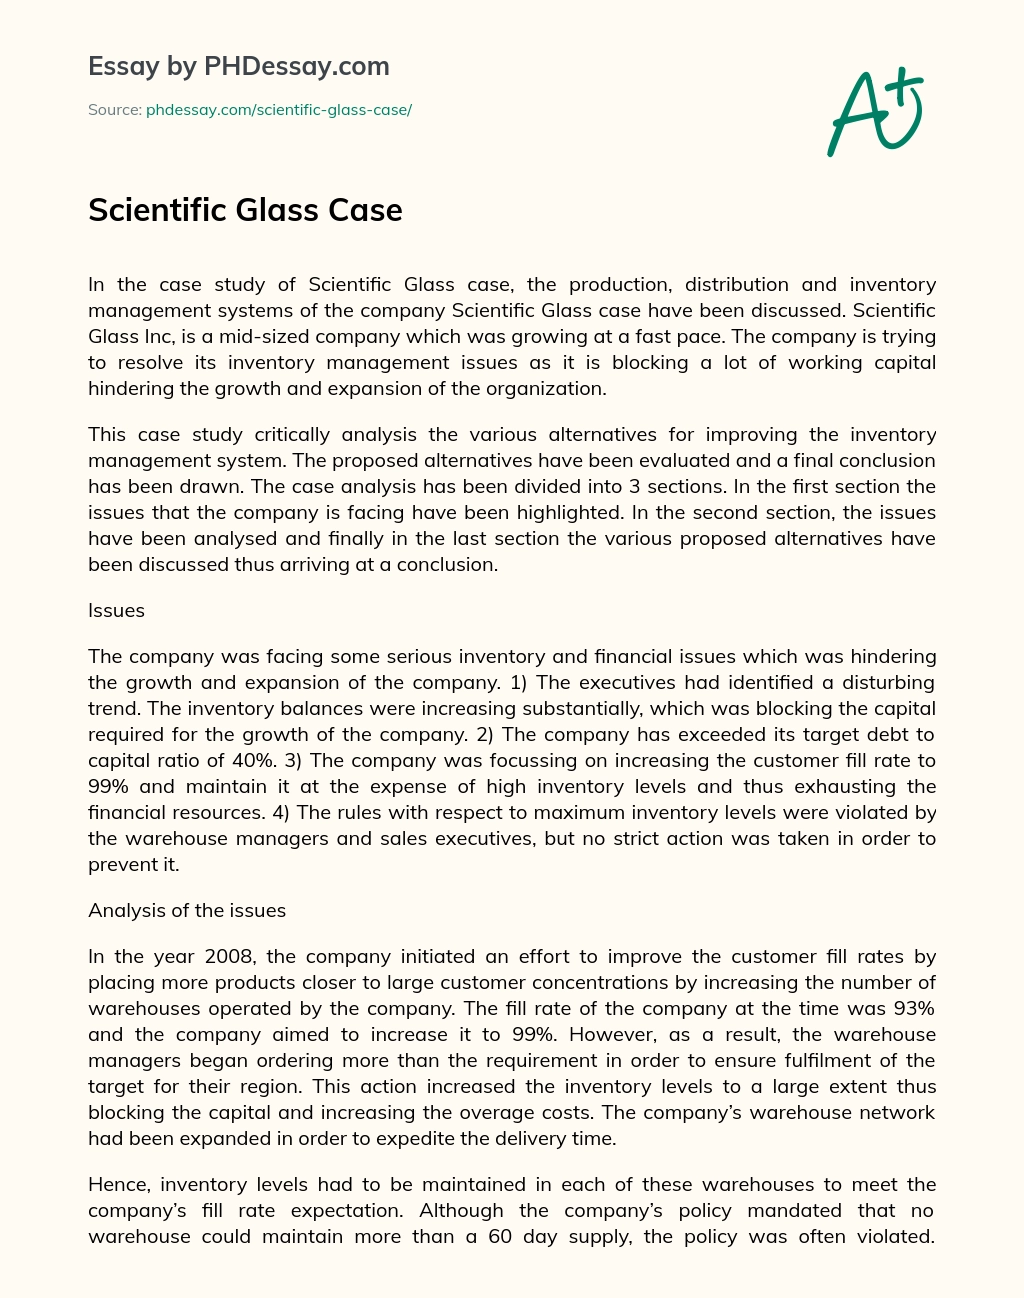 Scientific Glass Case essay